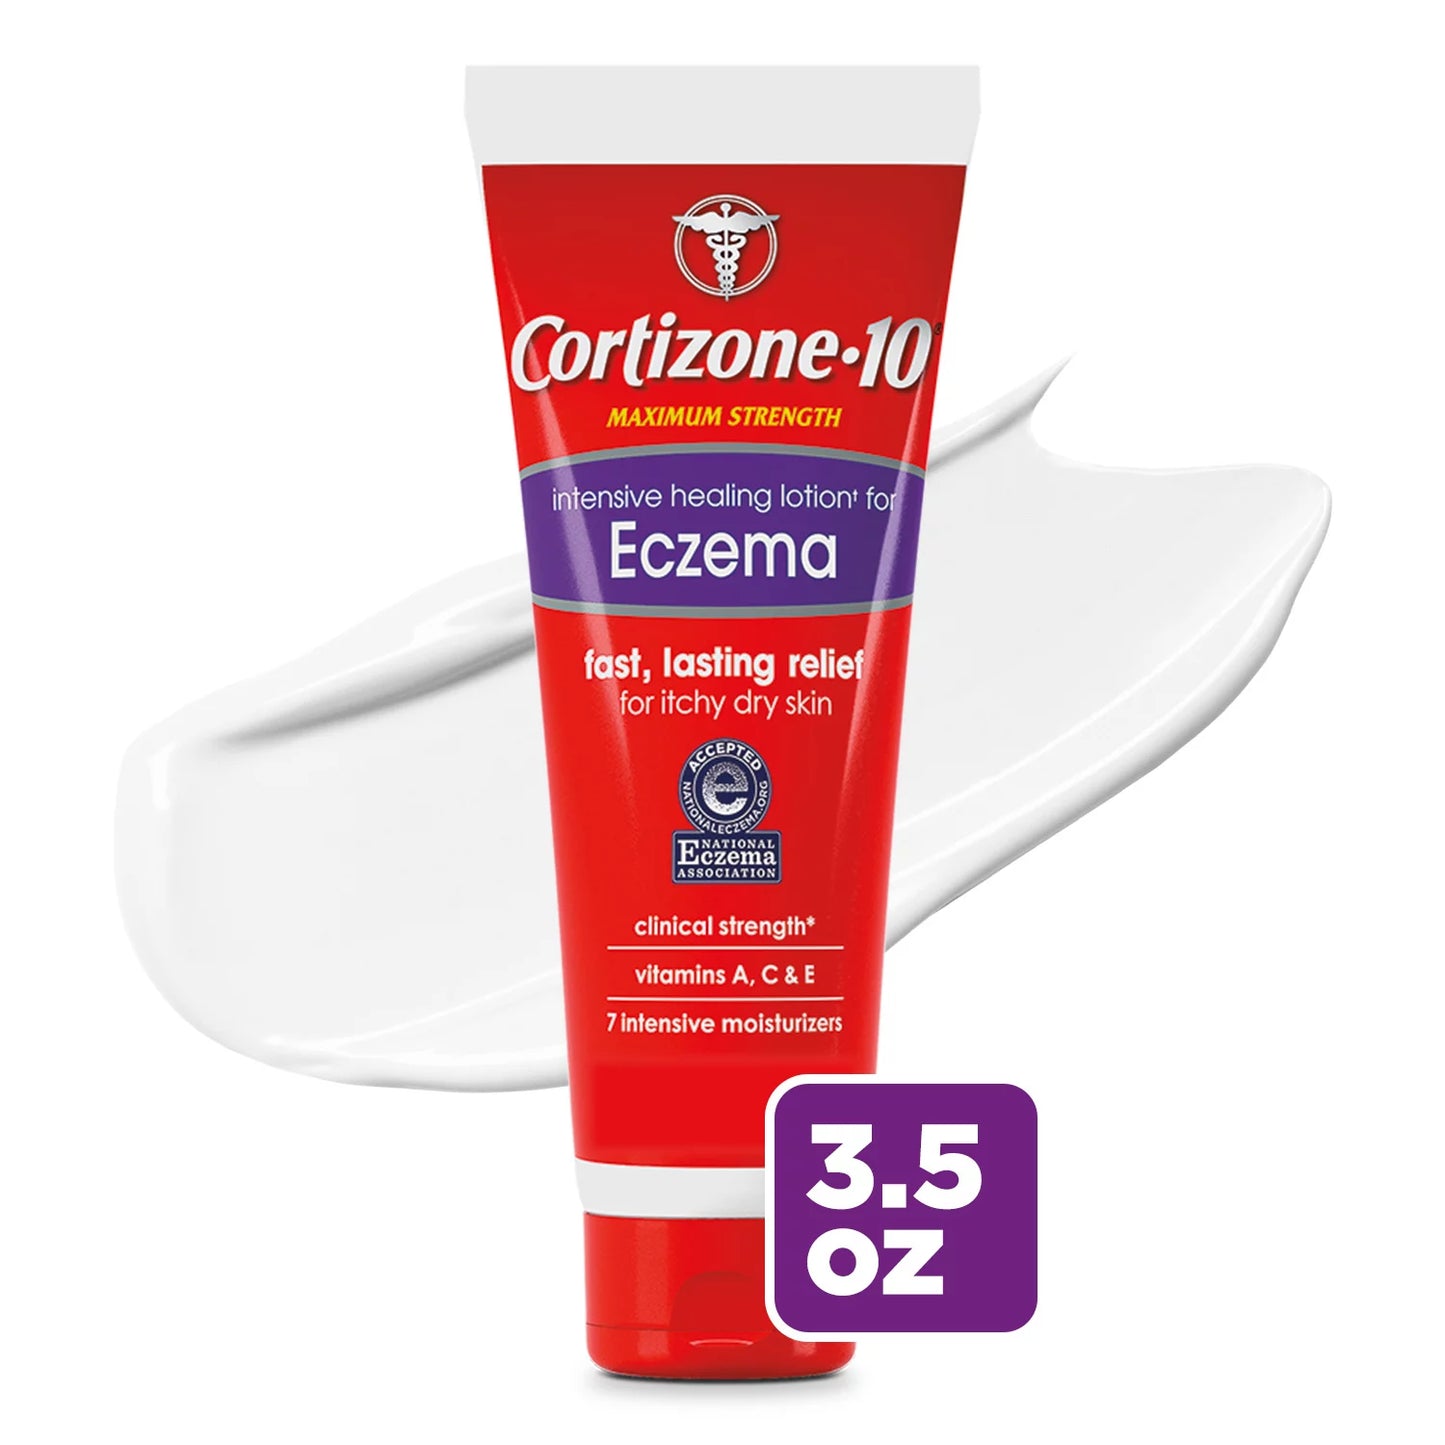 Cortizone 10 Maximum Strength 1% Hydrocortisone Anti-Itch Lotion for Eczema 3.5oz